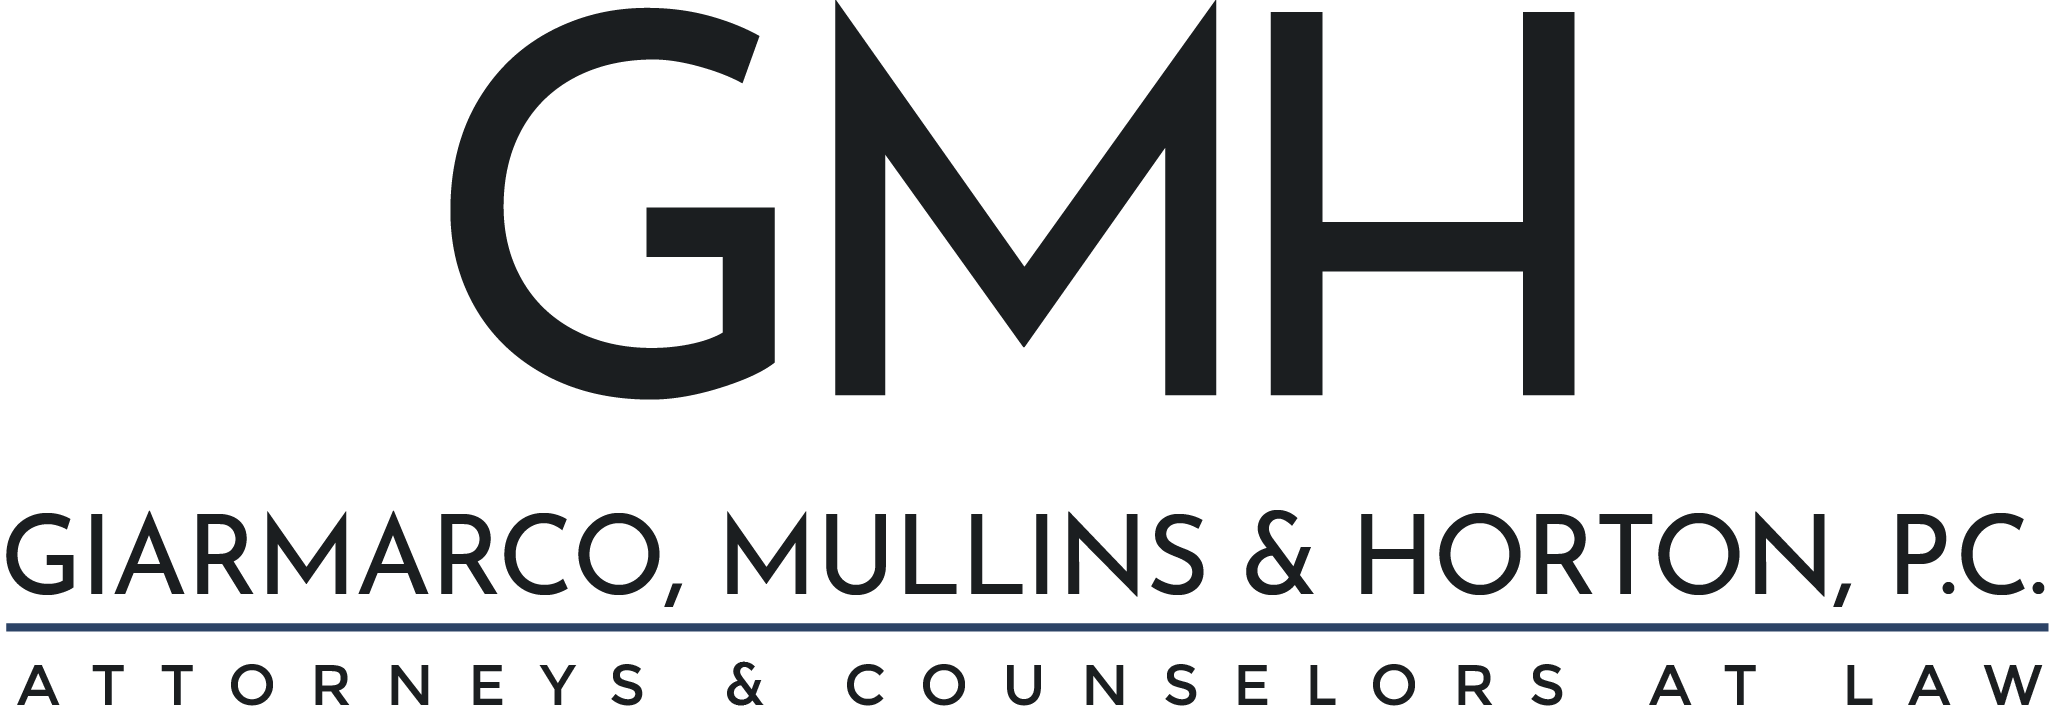 Giarmarco, Mullins & Horton, P.C. logo